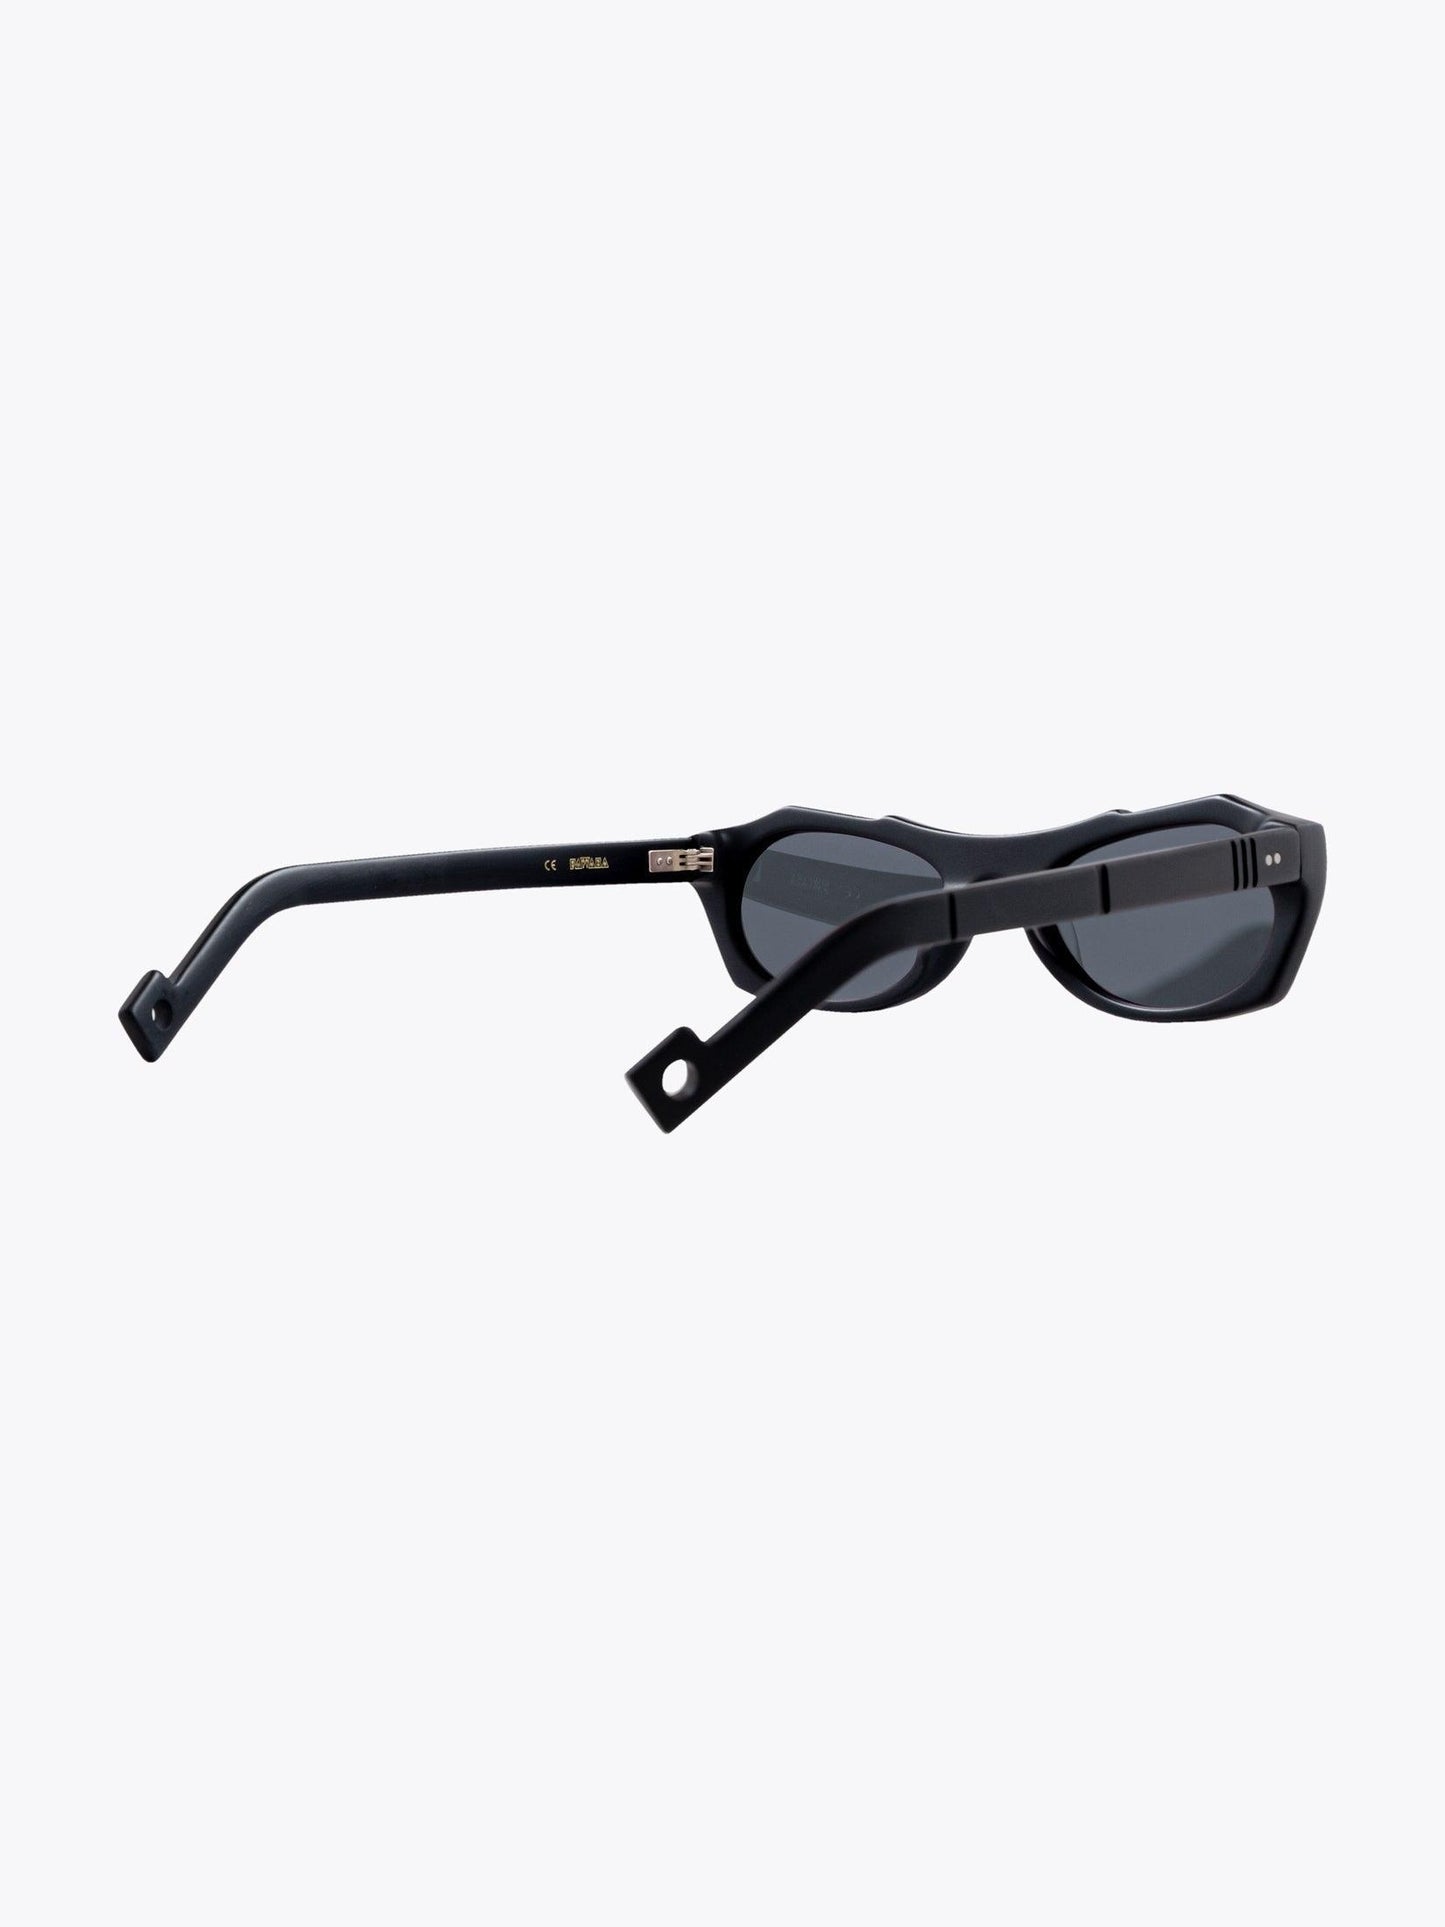 Pawaka Enambelas 16 Matte Black Sunglasses - APODEP.com